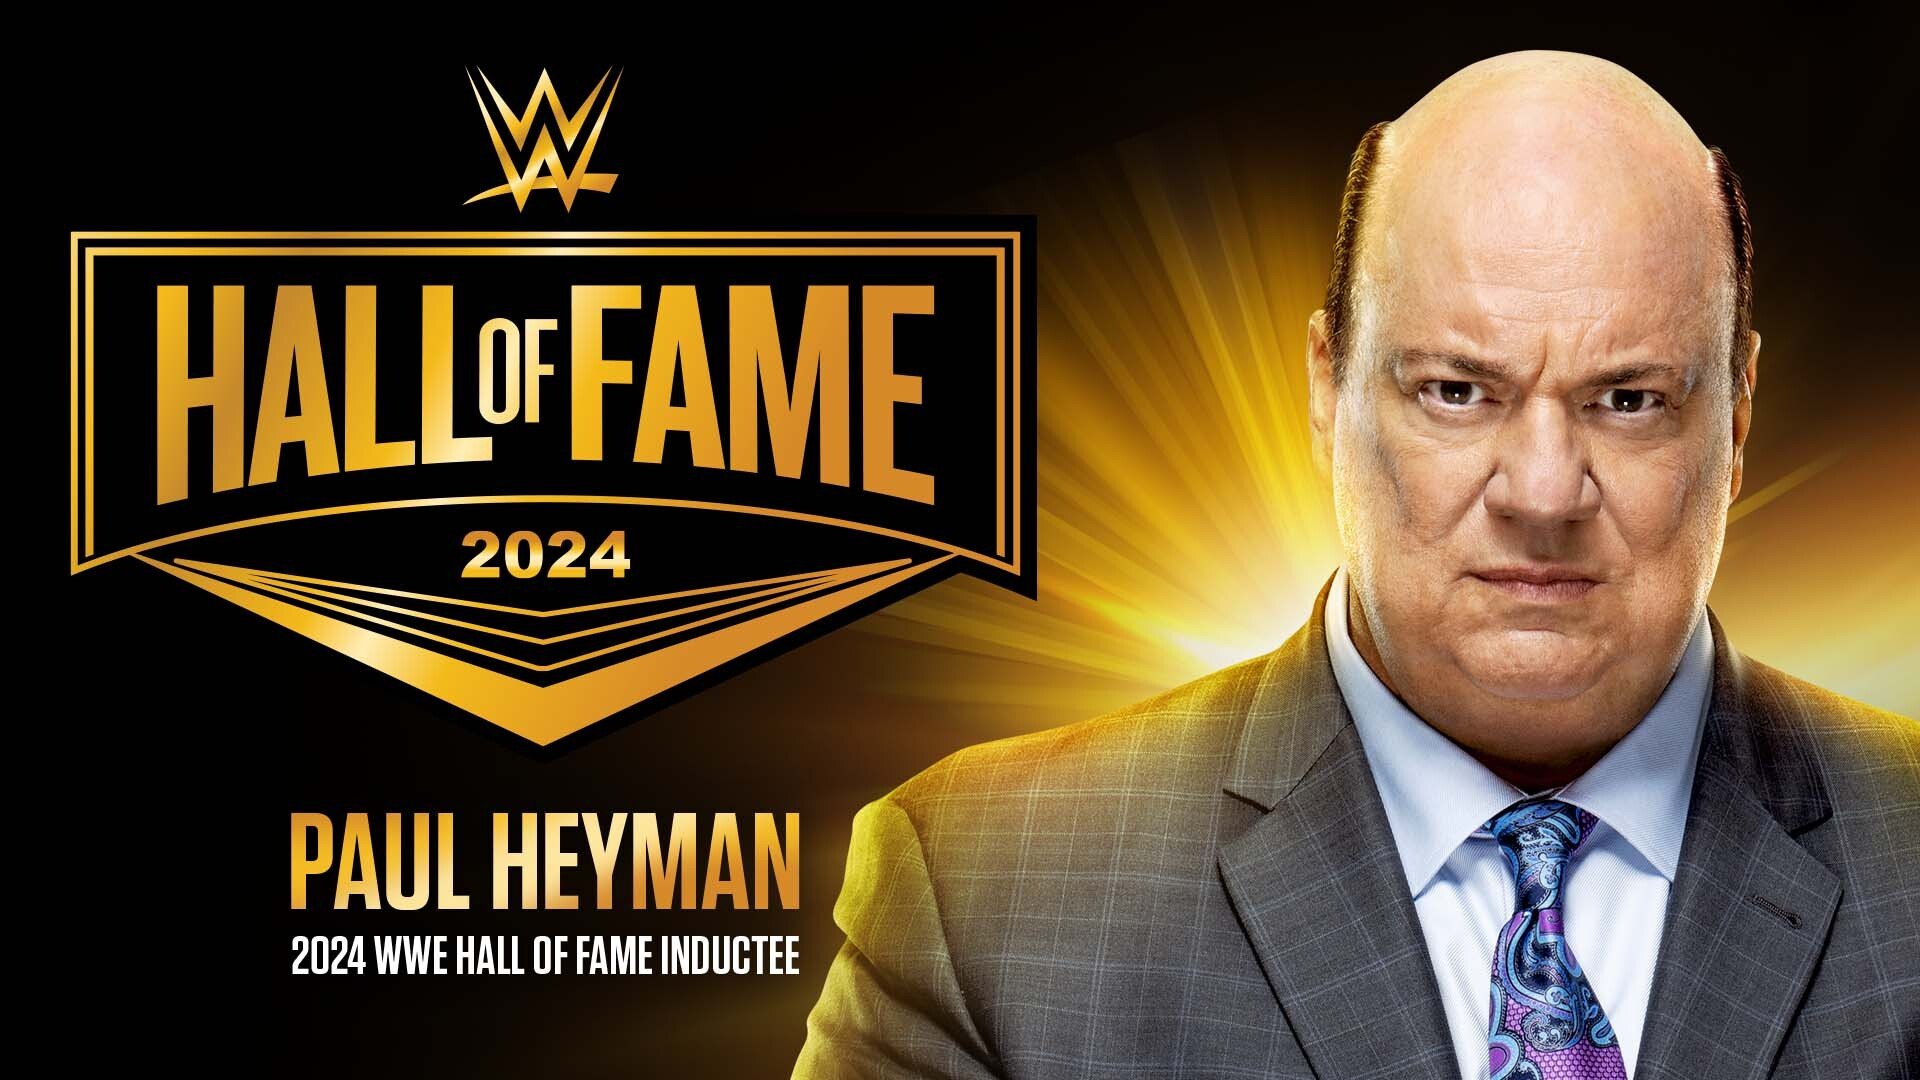 Booker T’s Response to Paul Heyman’s Plan for an Impromptu WWE Hall of Fame Speech